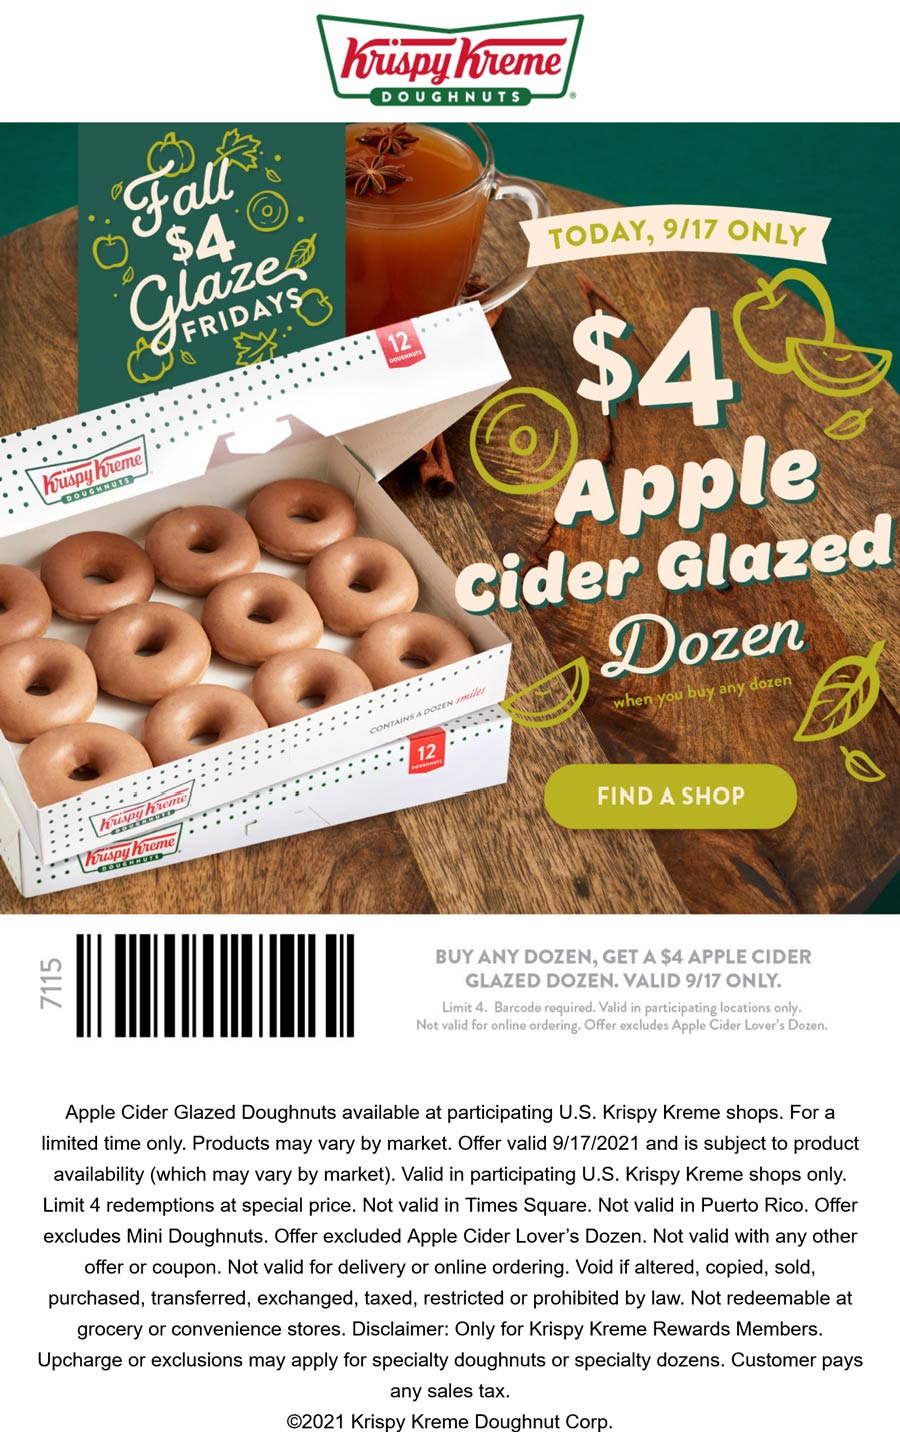 Krispy Kreme restaurants Coupon  Second dozen apple cider glazed doughnuts $4 today at Krispy Kreme #krispykreme 